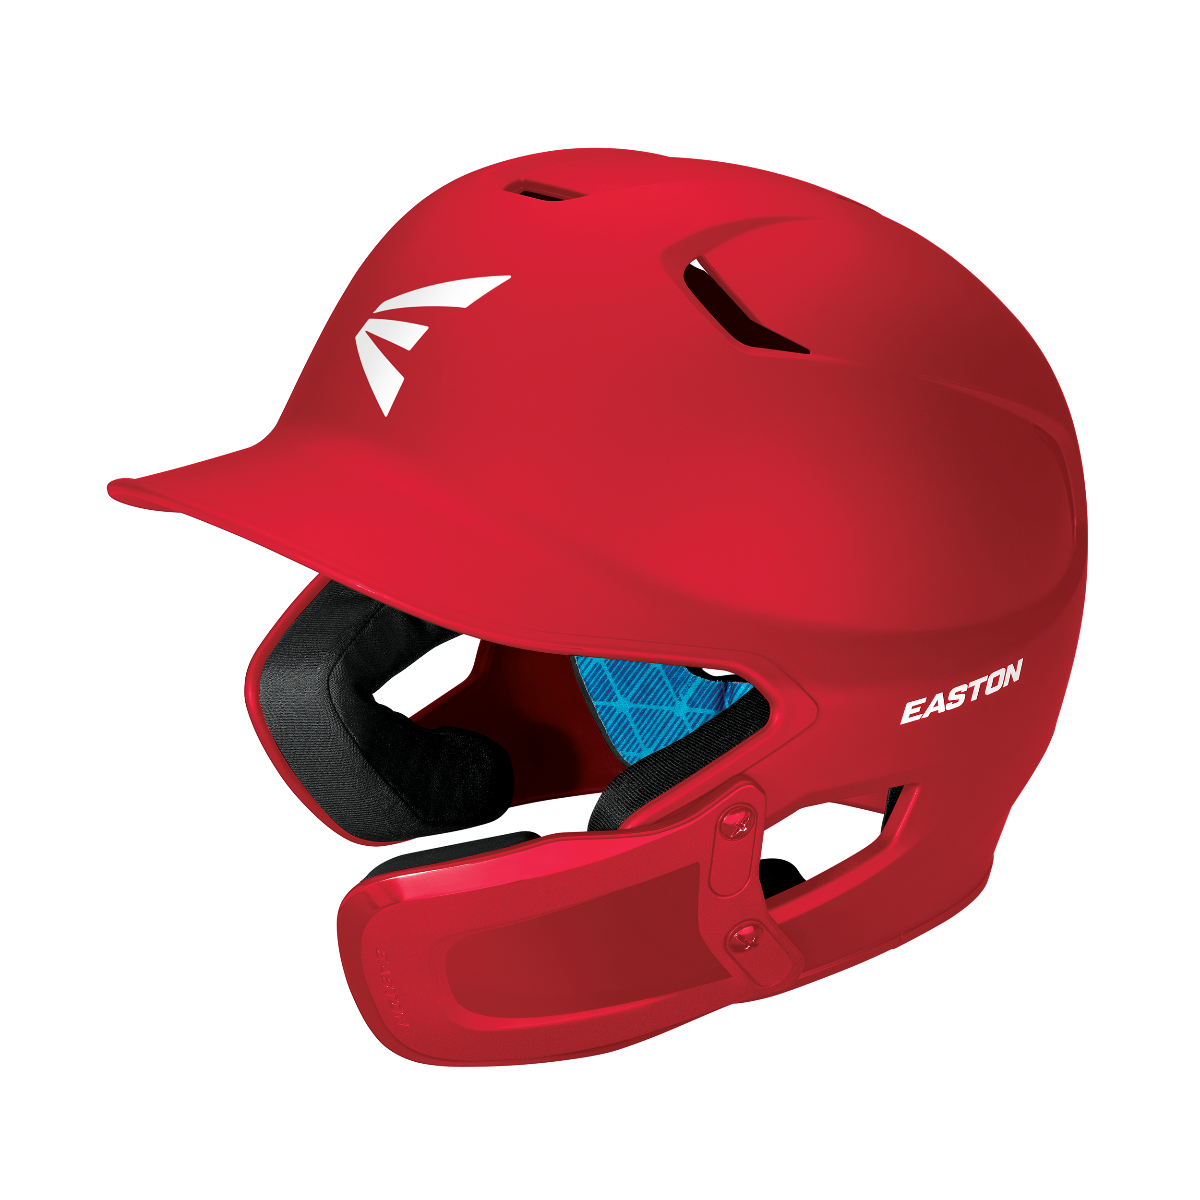 Easton Extended Jaw Guard C Flap Easton Z5 Baseball Batting Helmet Extension 